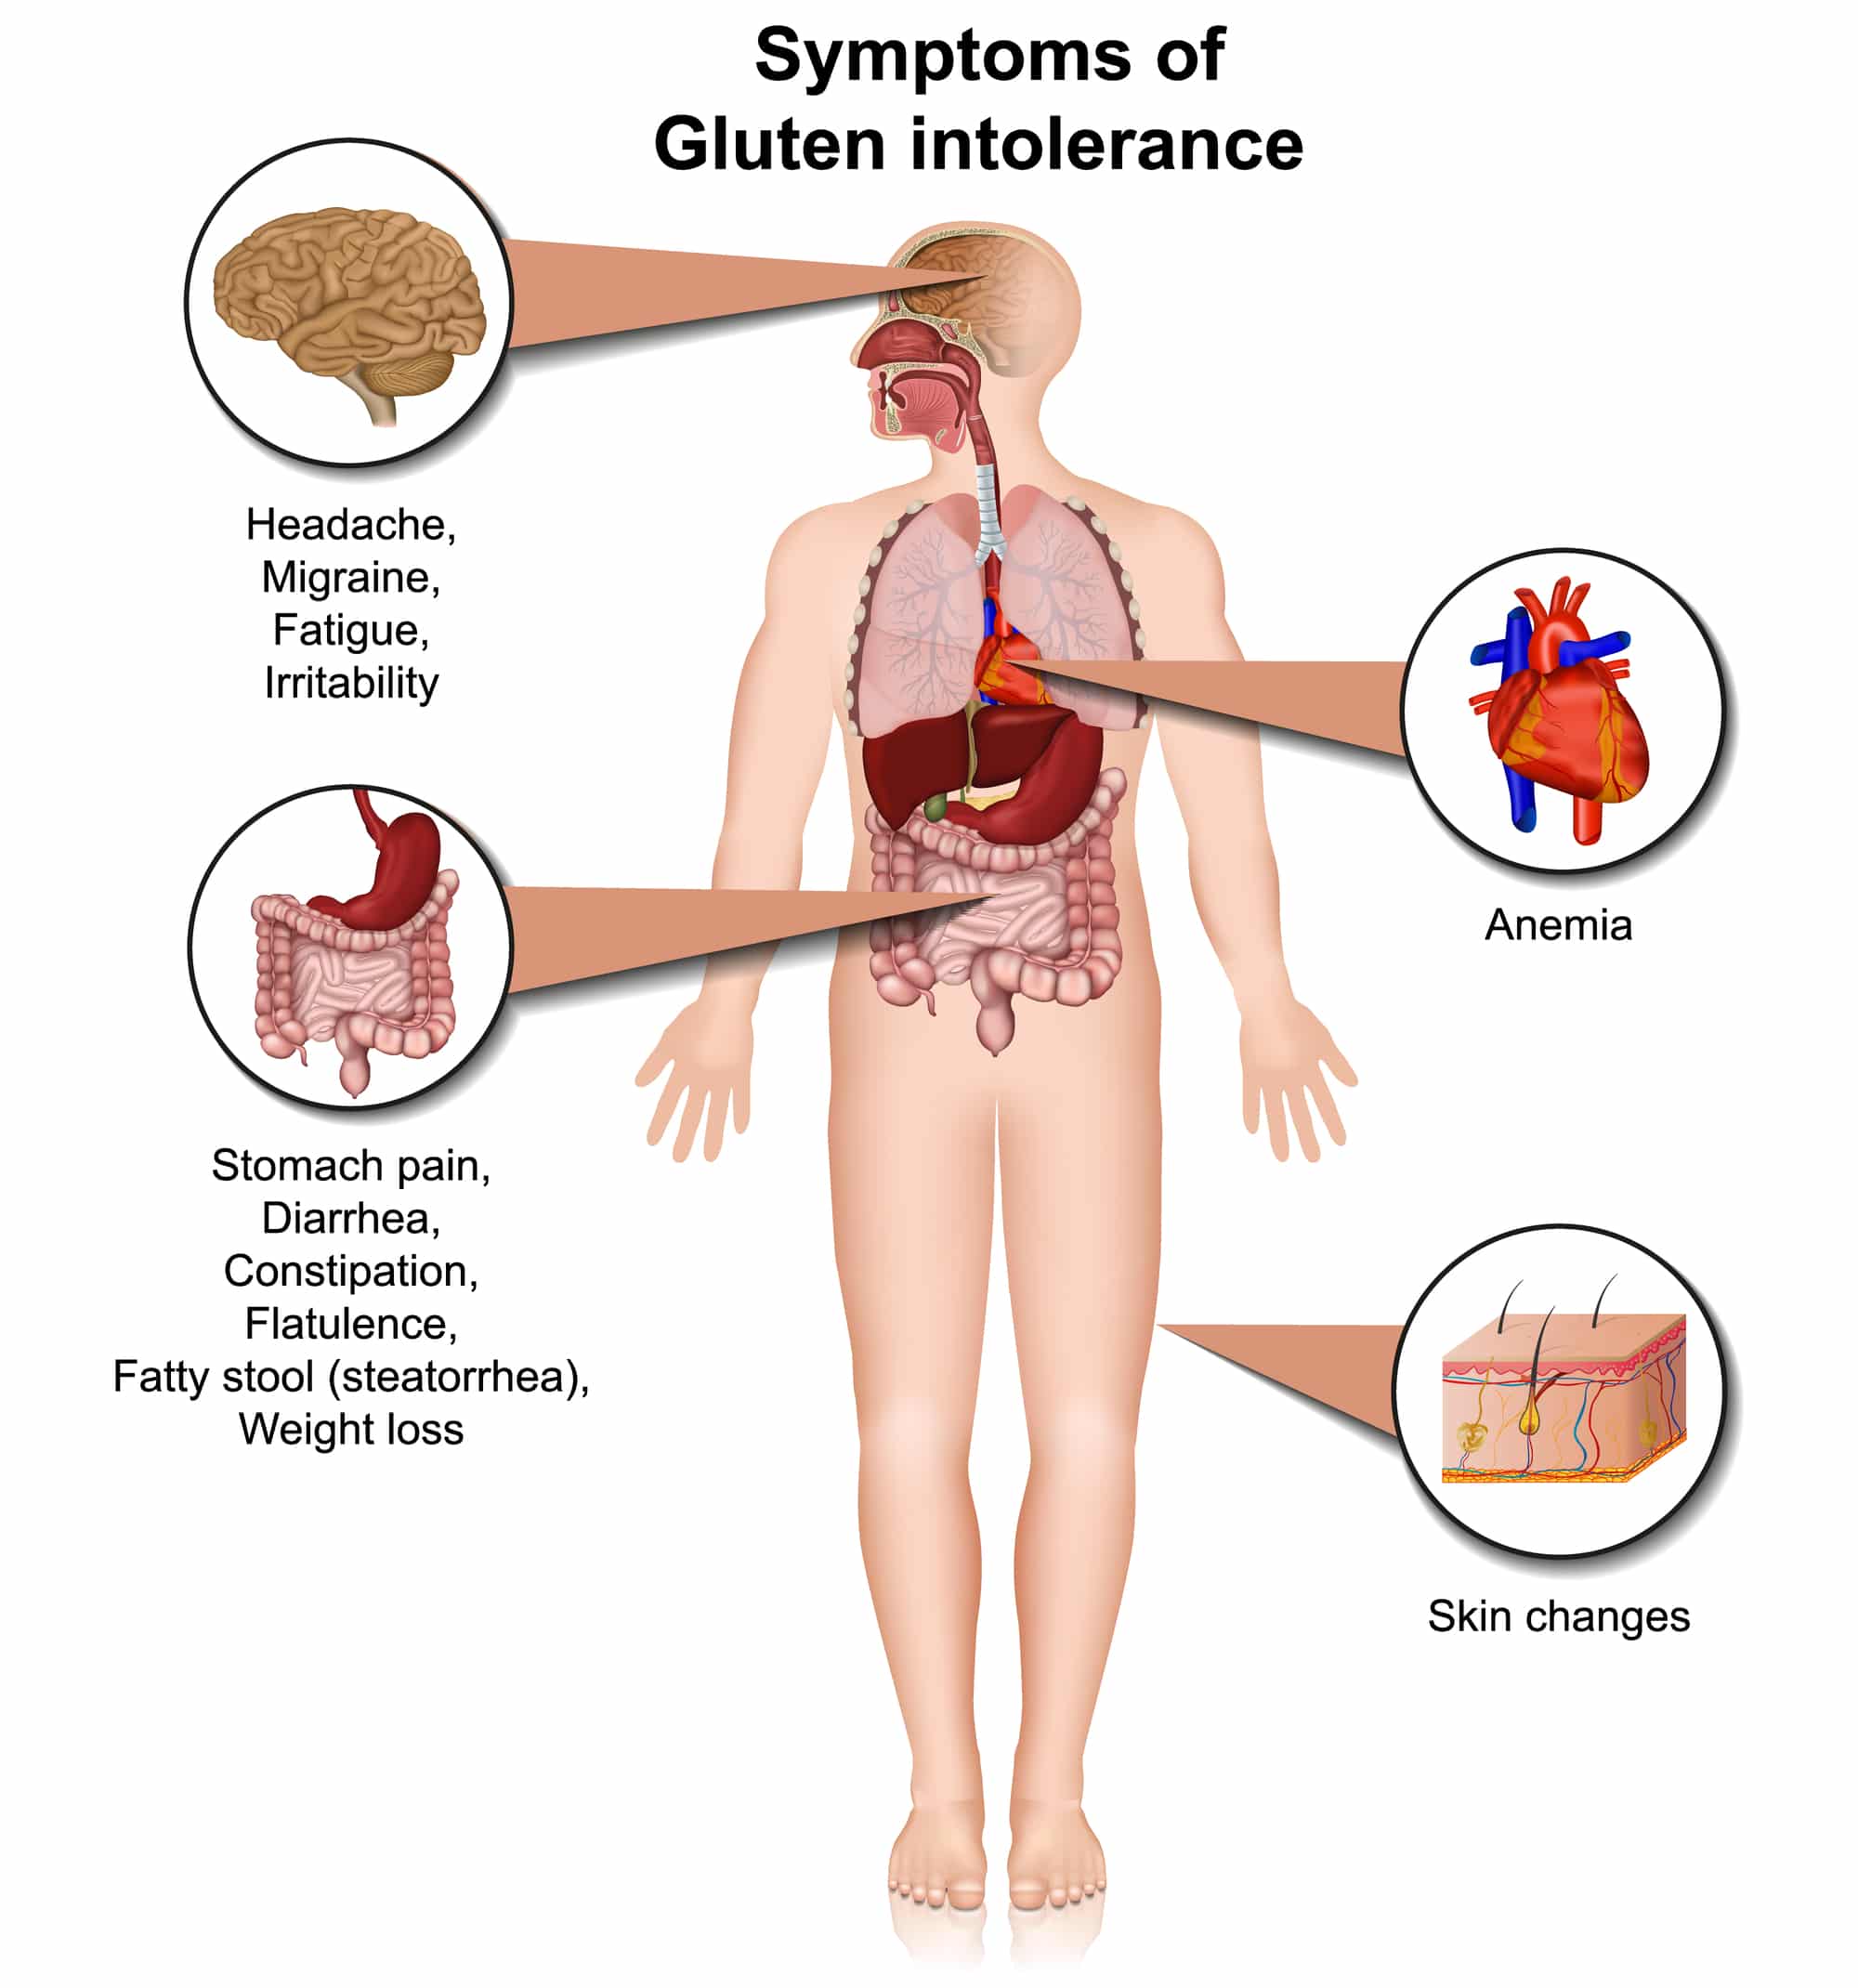 Symptoms of gluten intolerance